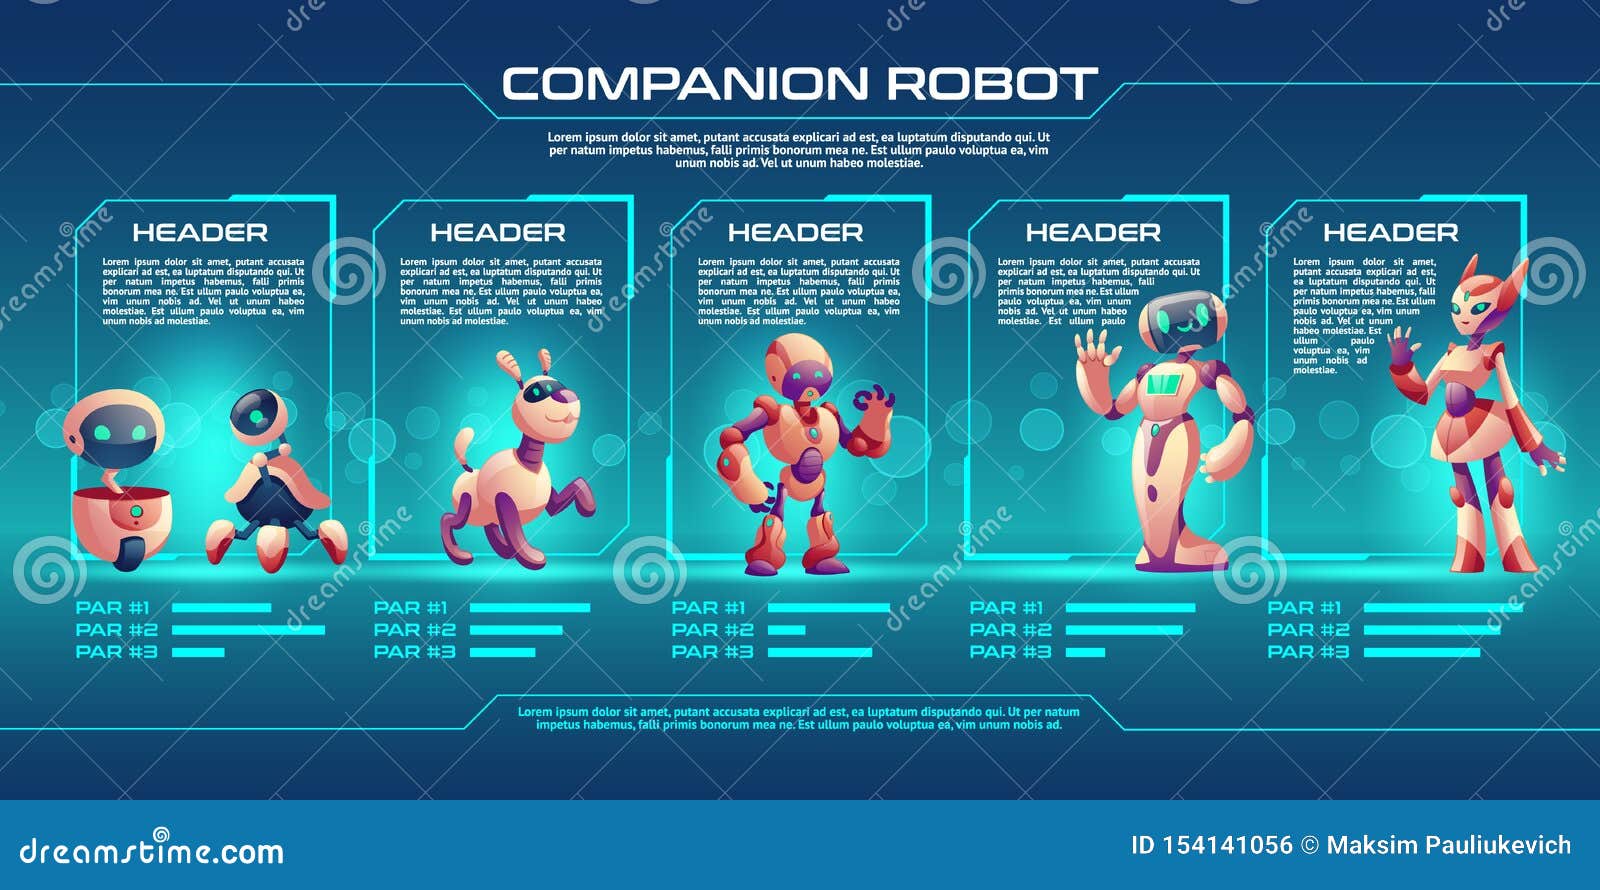 companion robot evolution timeline infographics